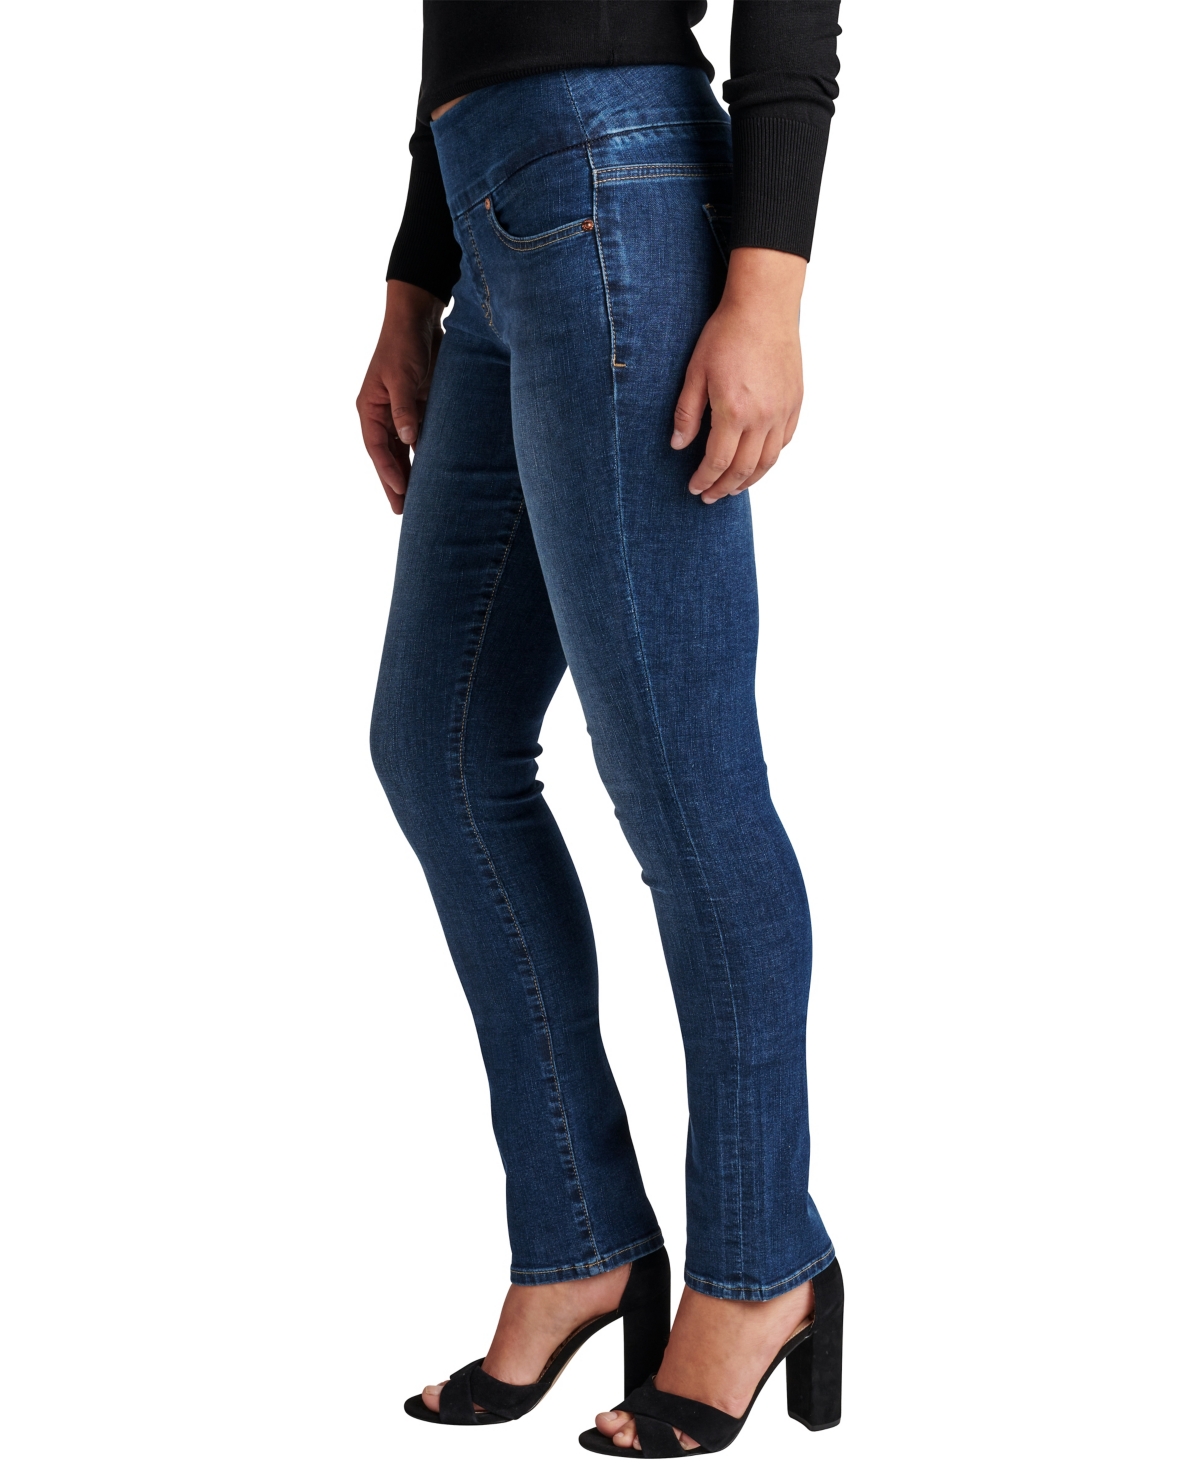 Jeans Women's Peri Mid Rise Straight Leg Pull-On Jeans - Durango Wash